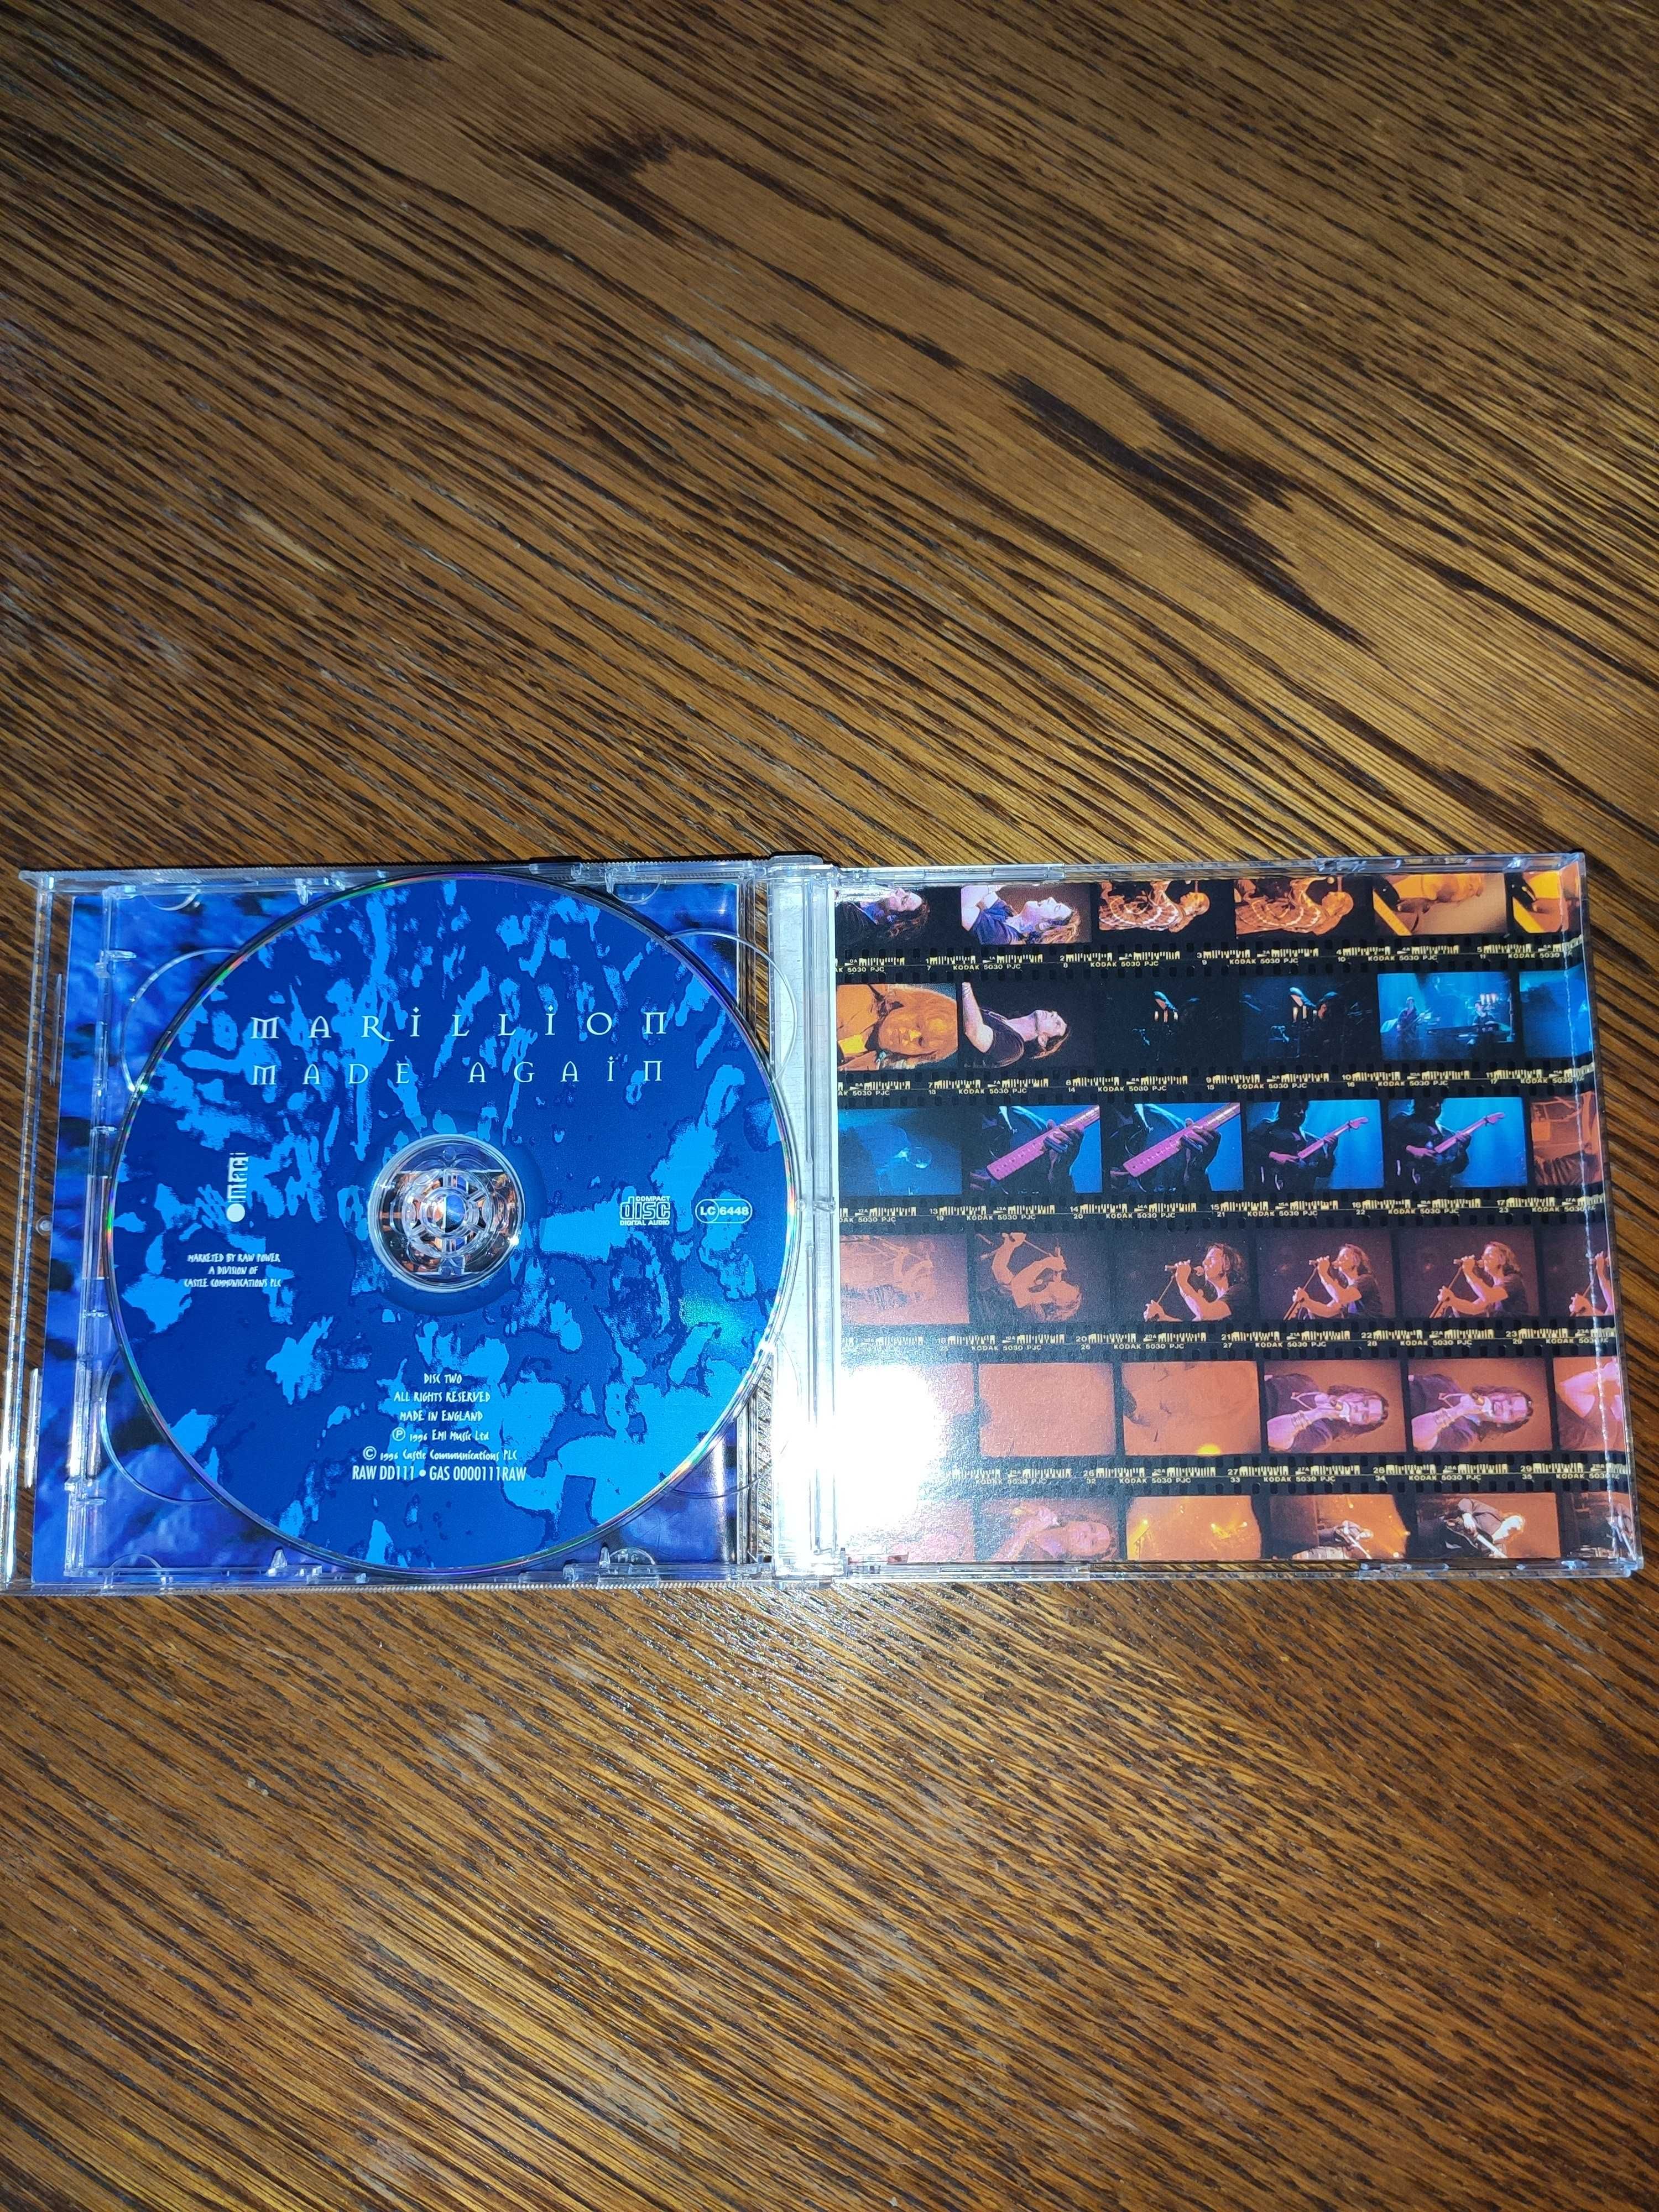 Marillion - Made again, 2CD 1996, England, Fish